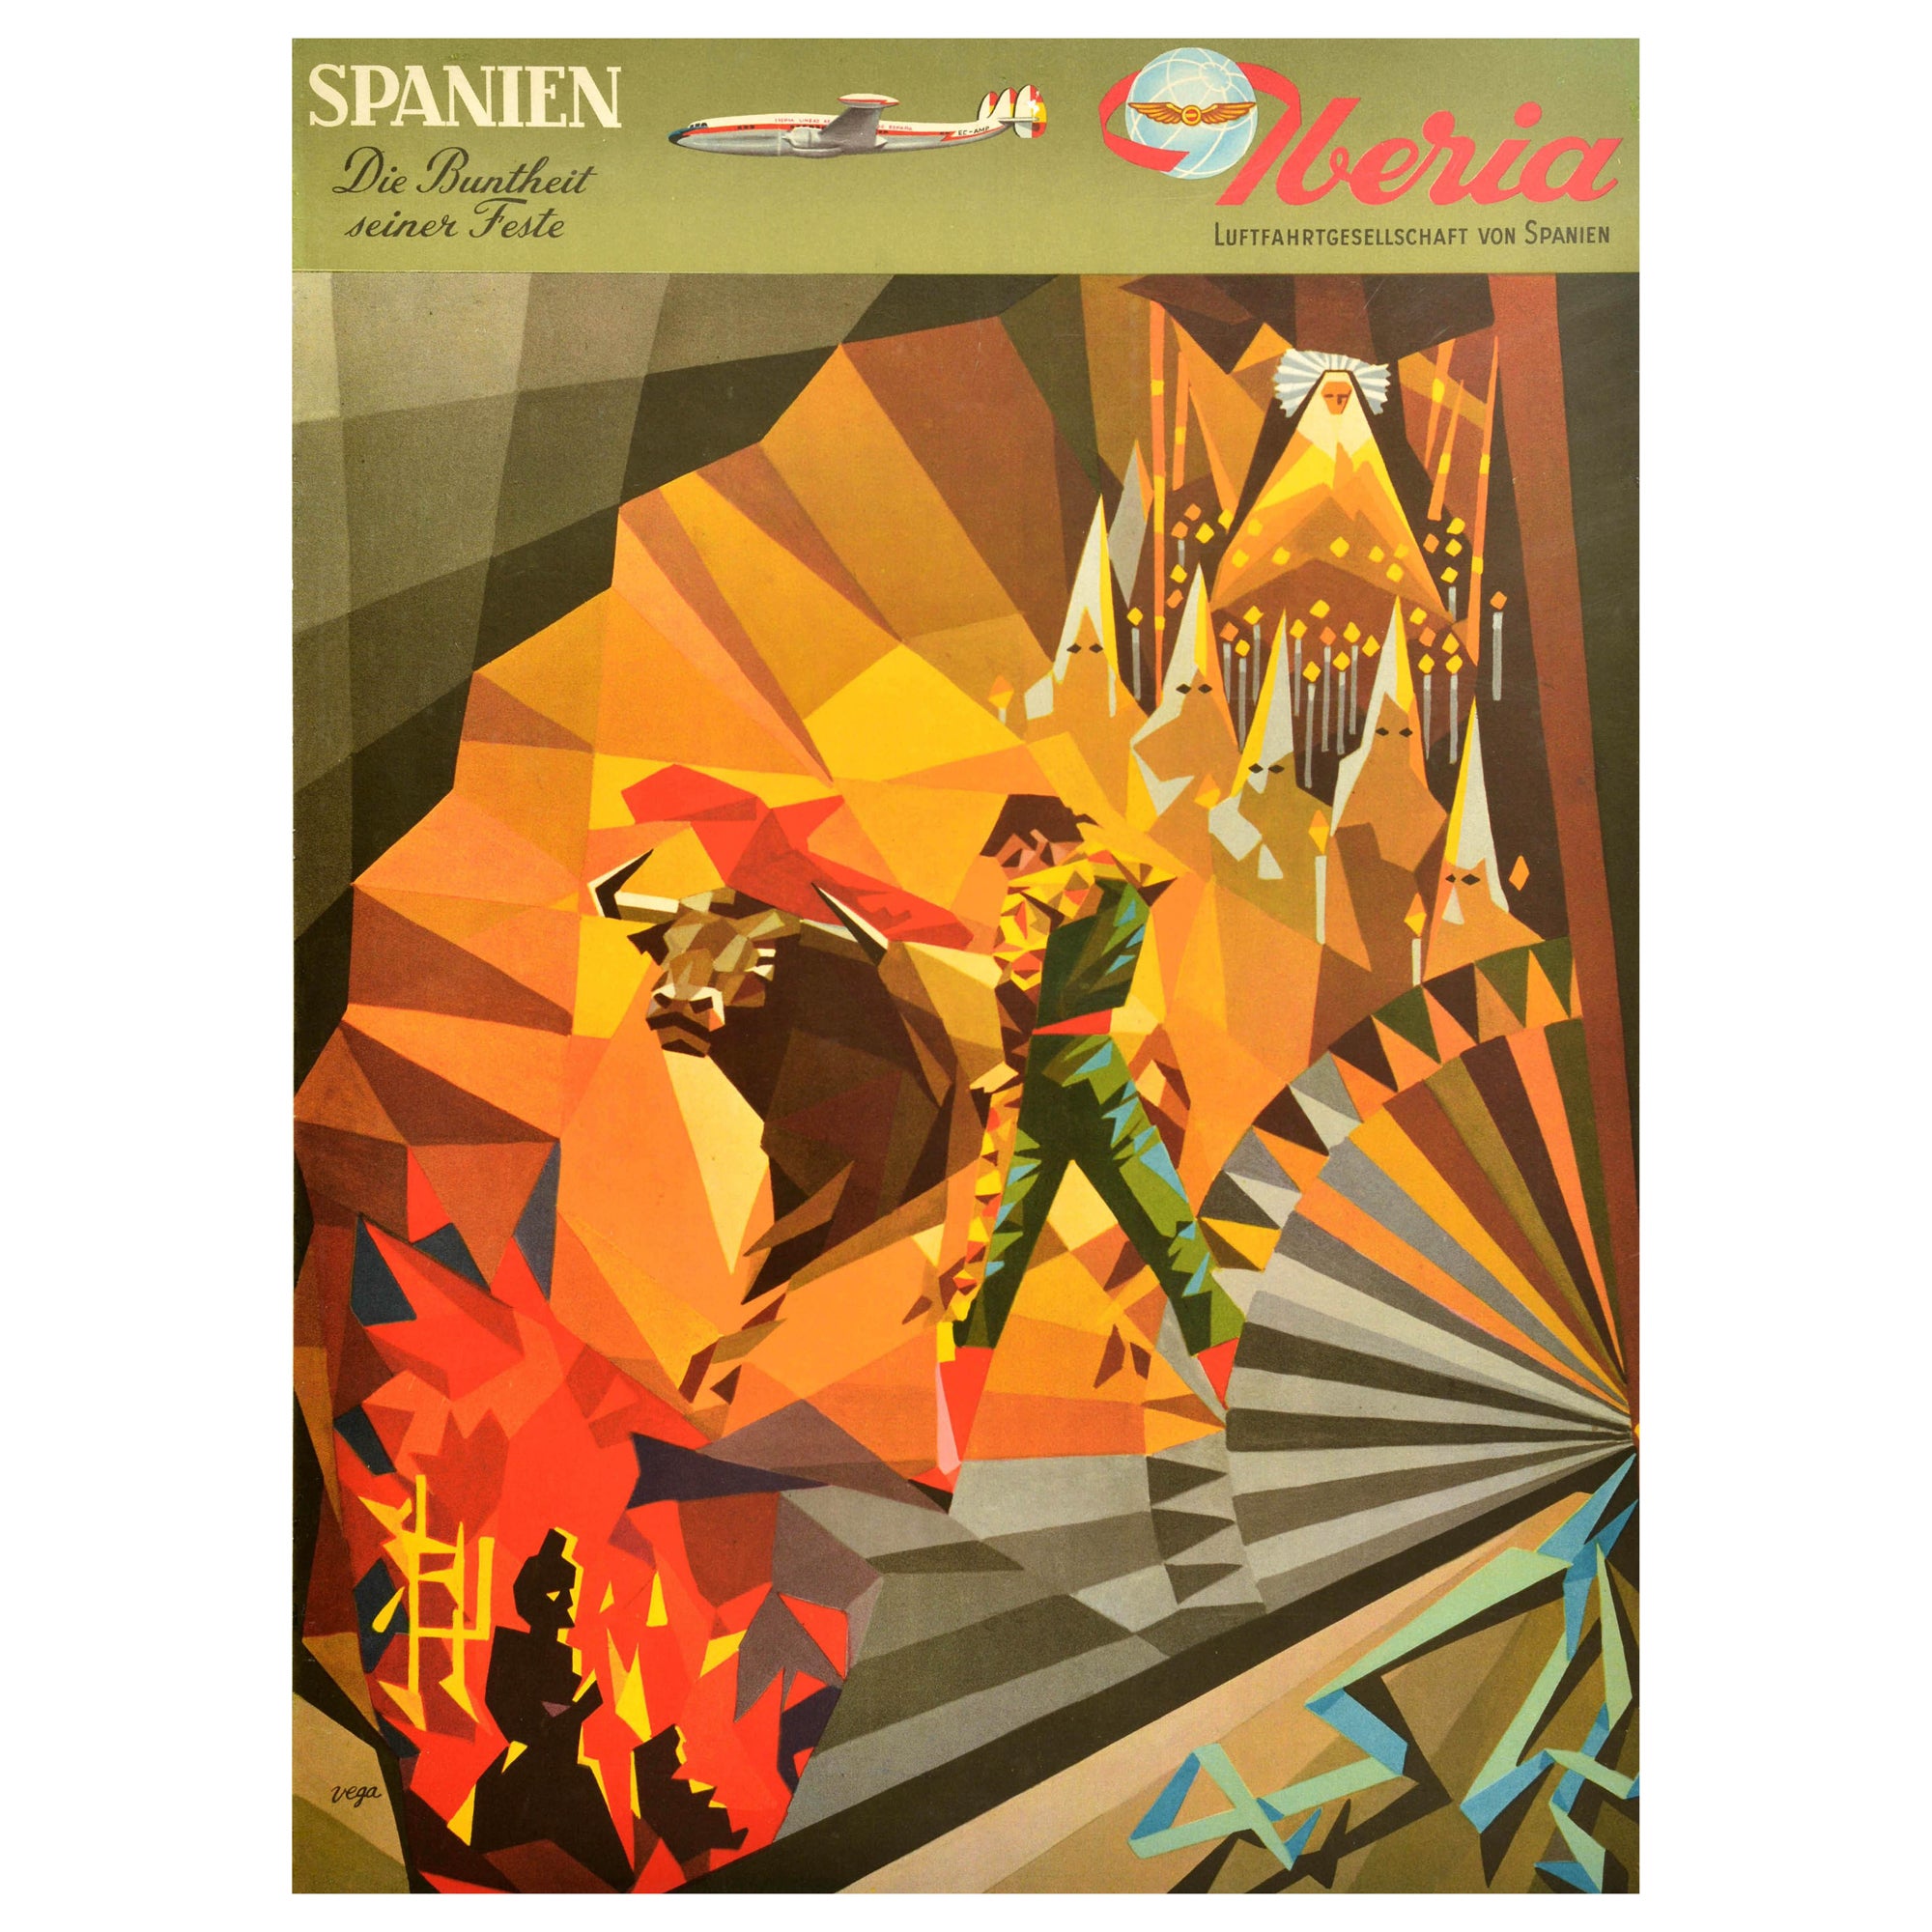 Original Vintage Travel Poster Colourful Spanish Festivals Iberia Airlines Spain